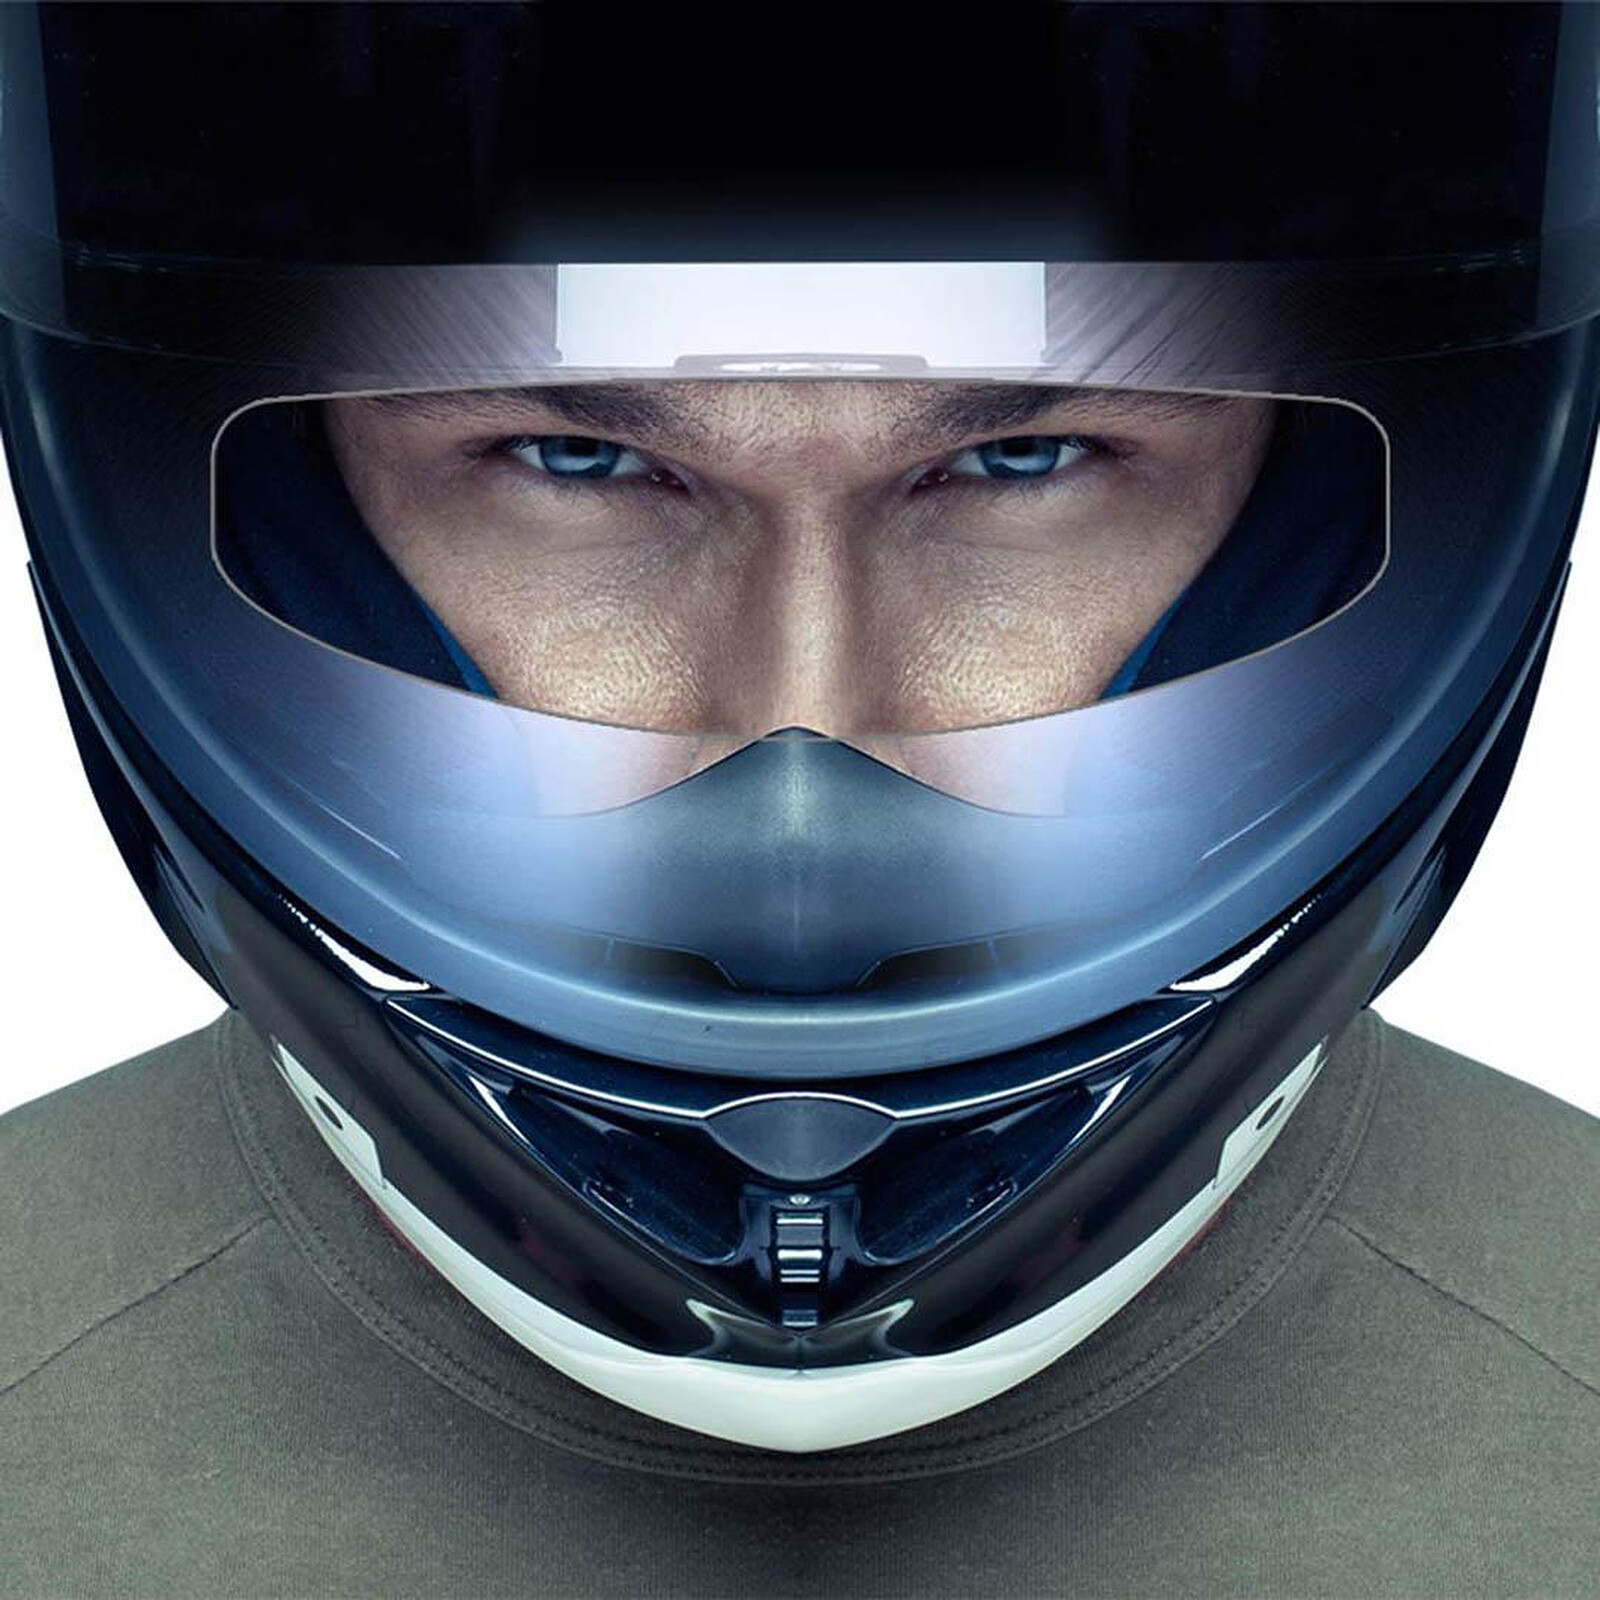 Equip Moto : Rain'X Anti-buée anti buée visiere casque moto